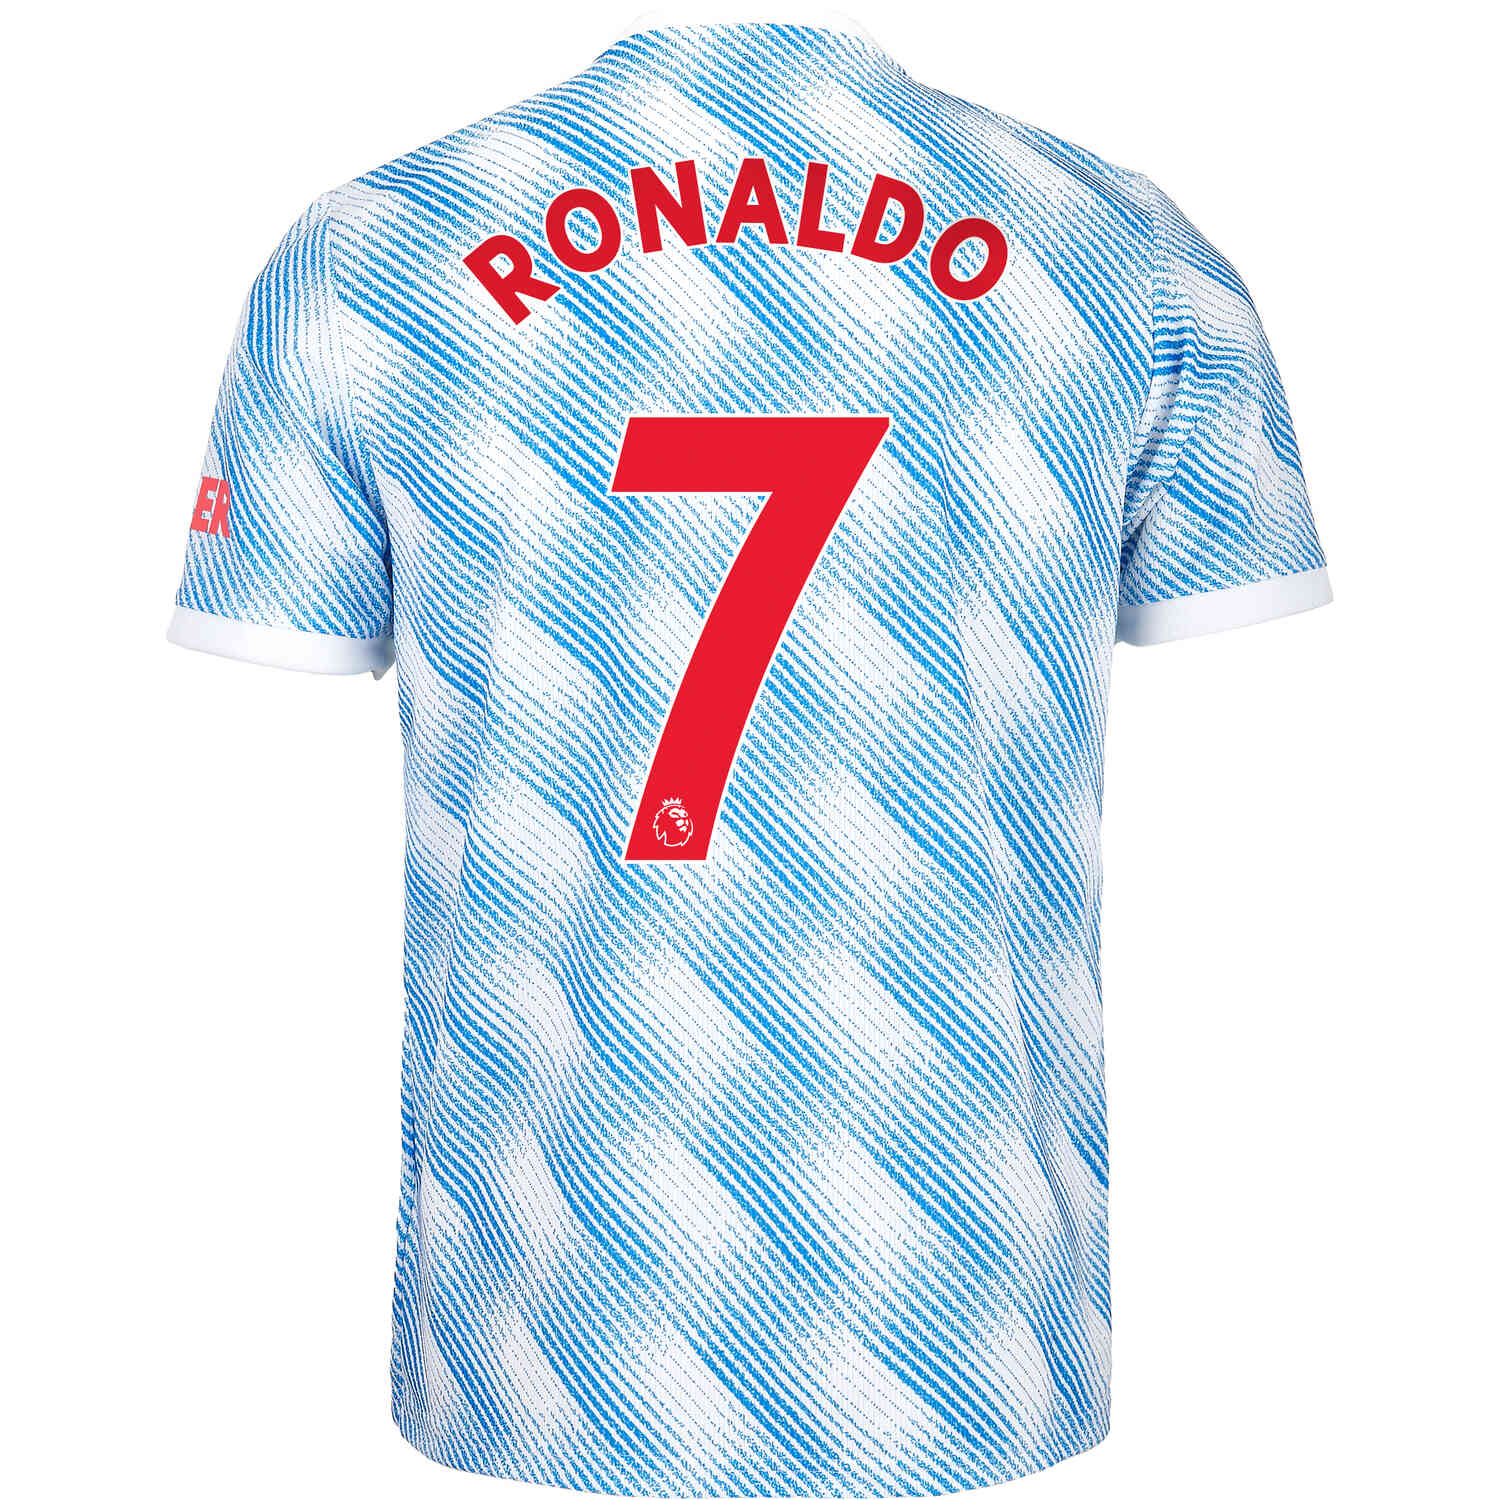 ronaldo soccer shirt youth